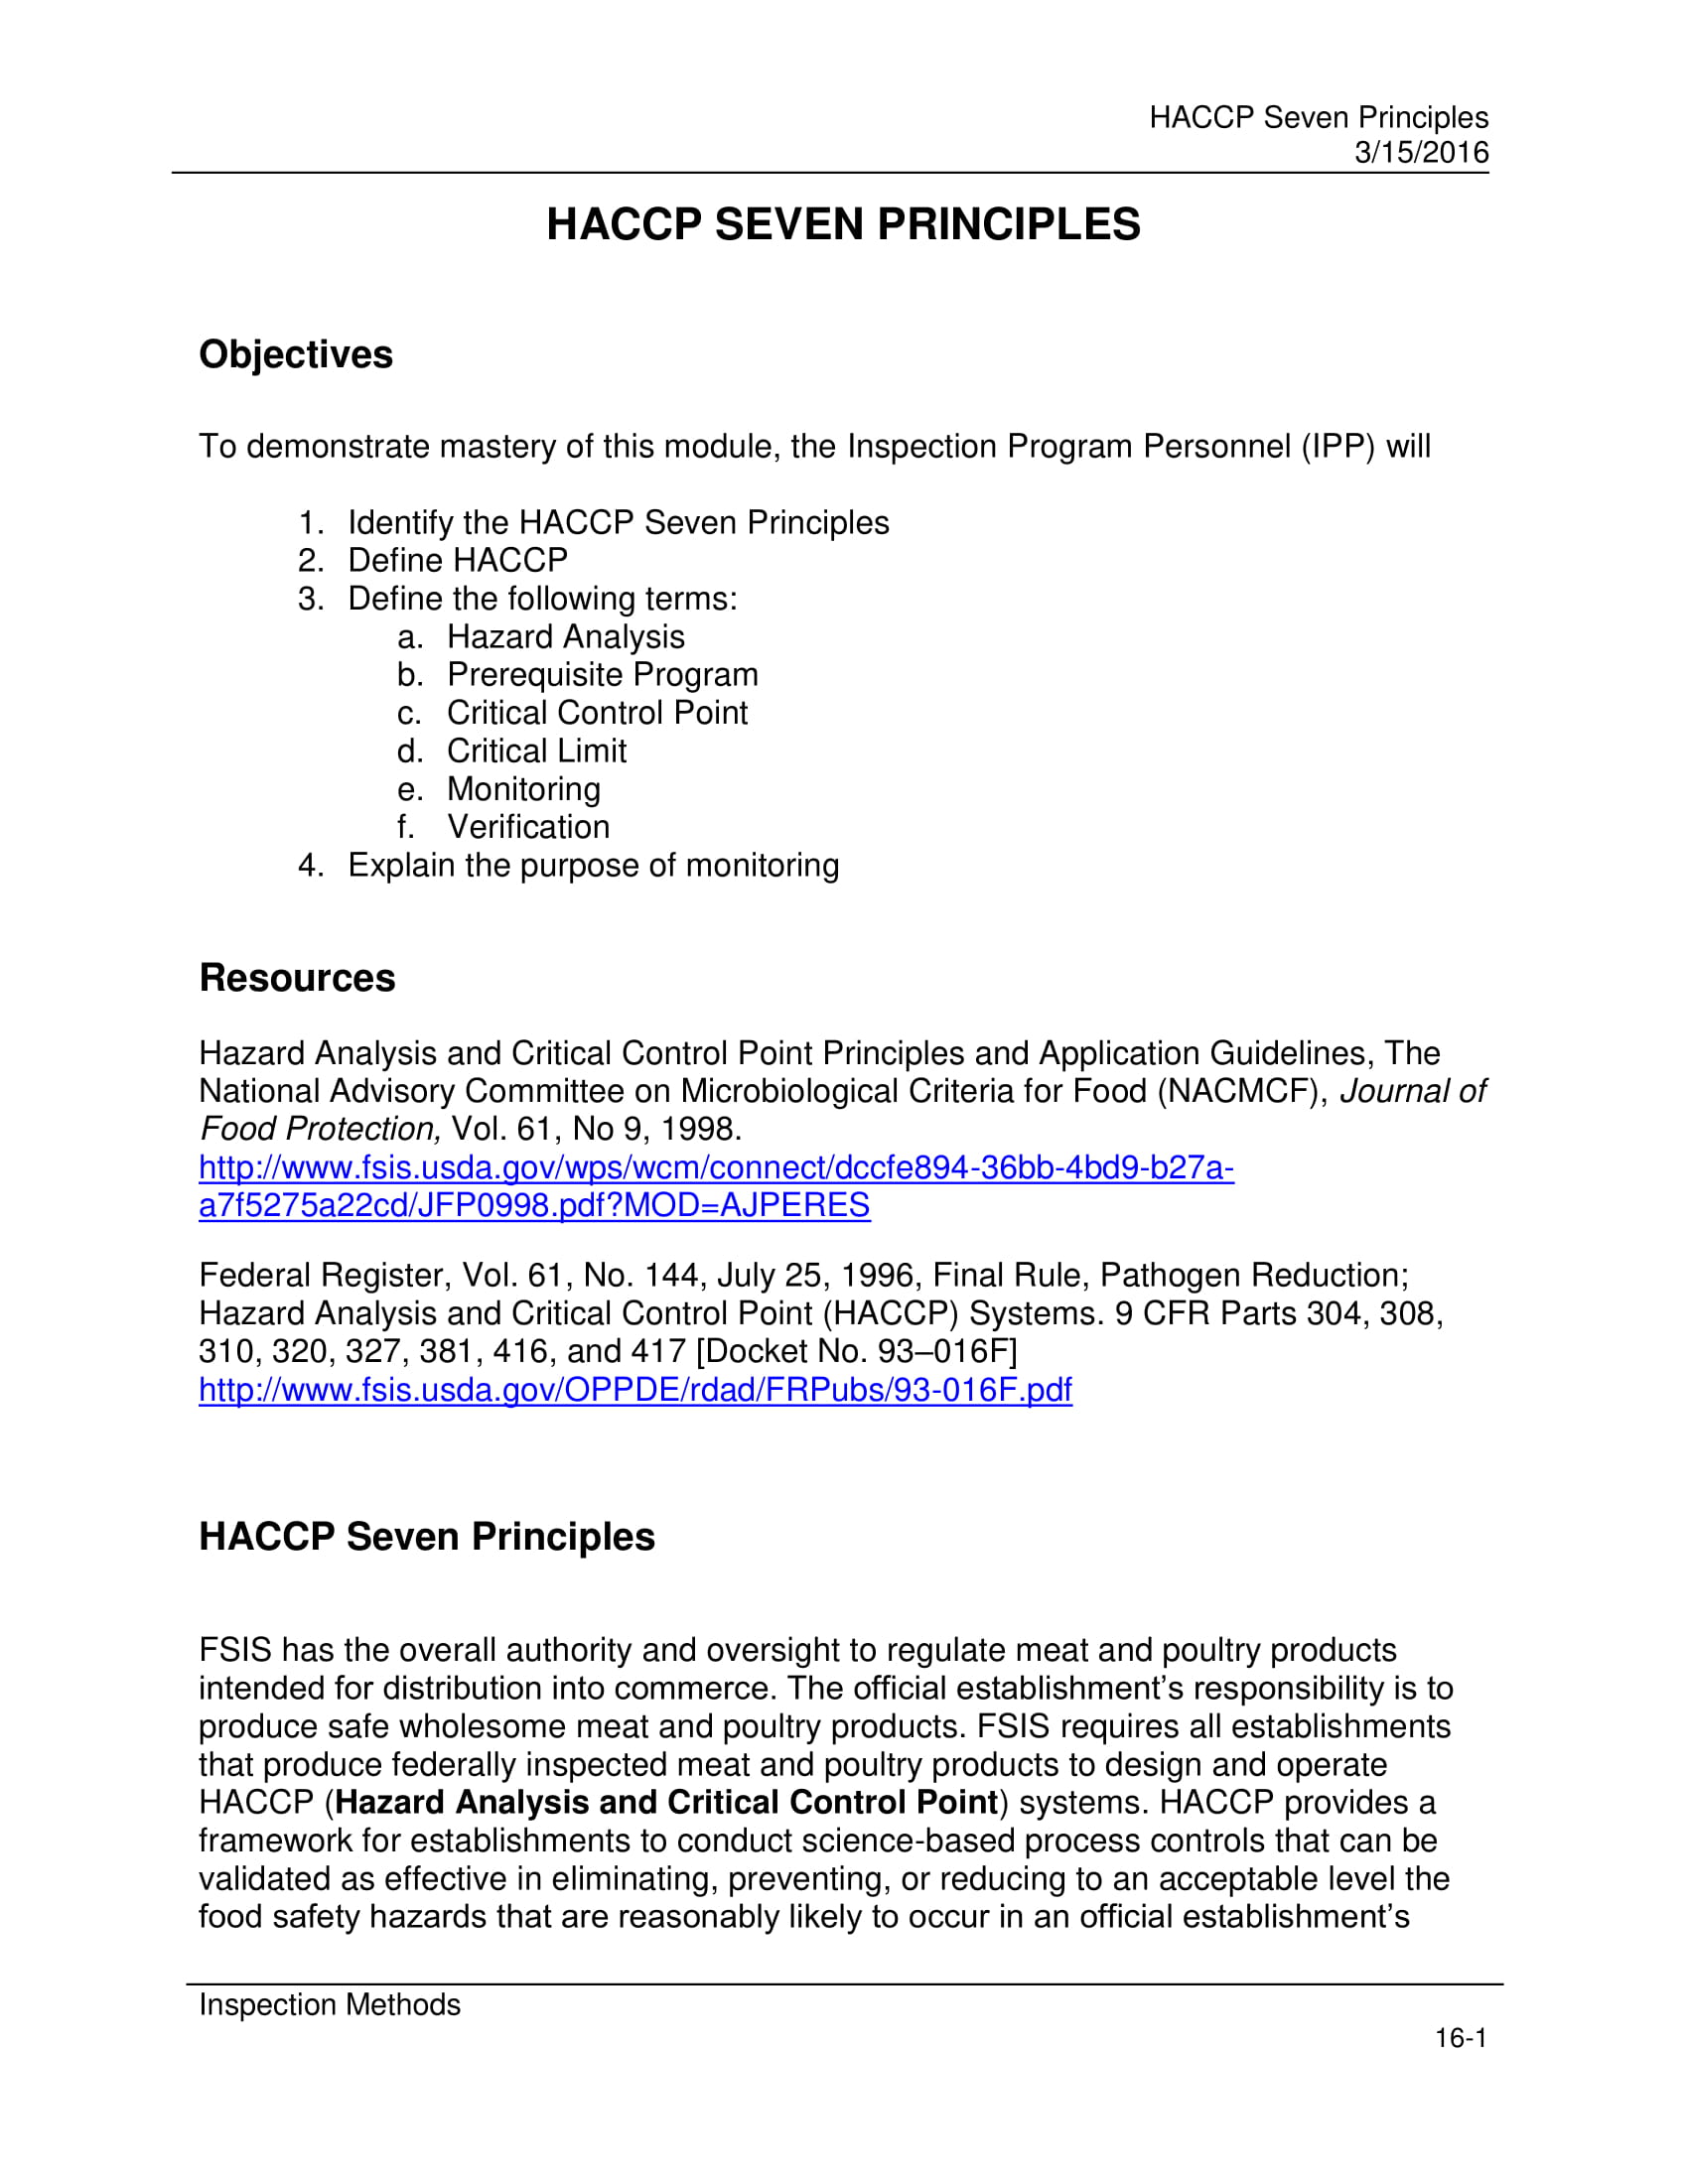 haccp principles in hazard analysis example 01